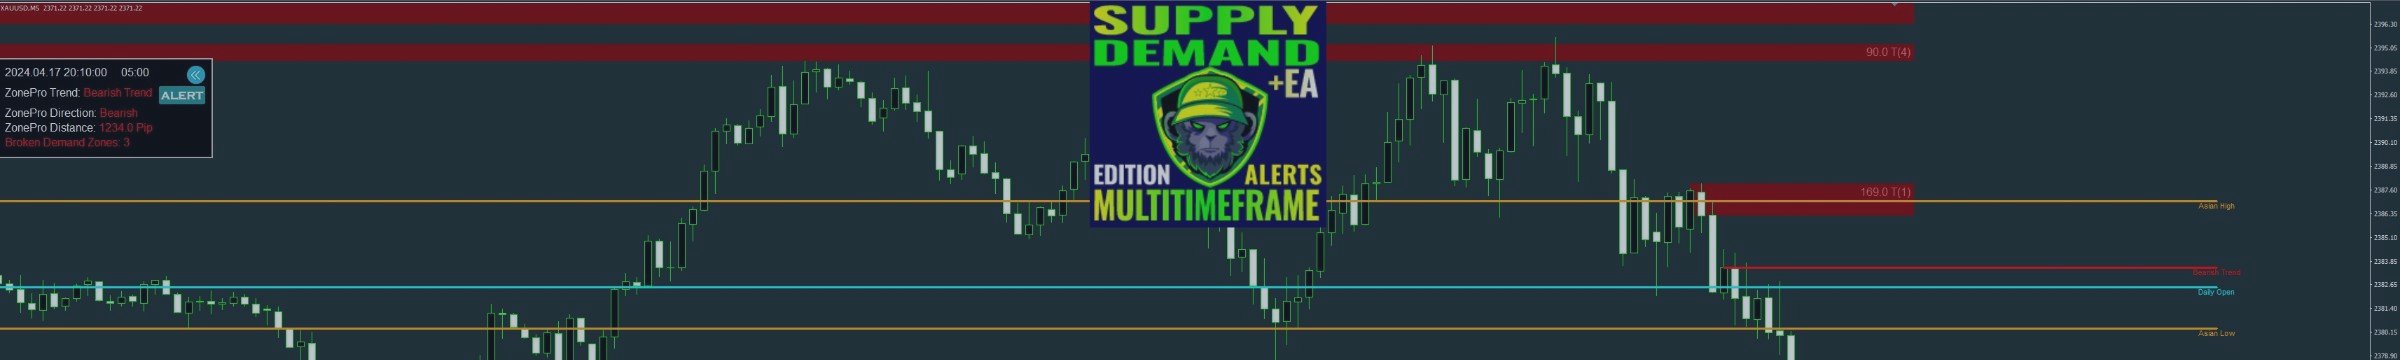 Supply Demand trading